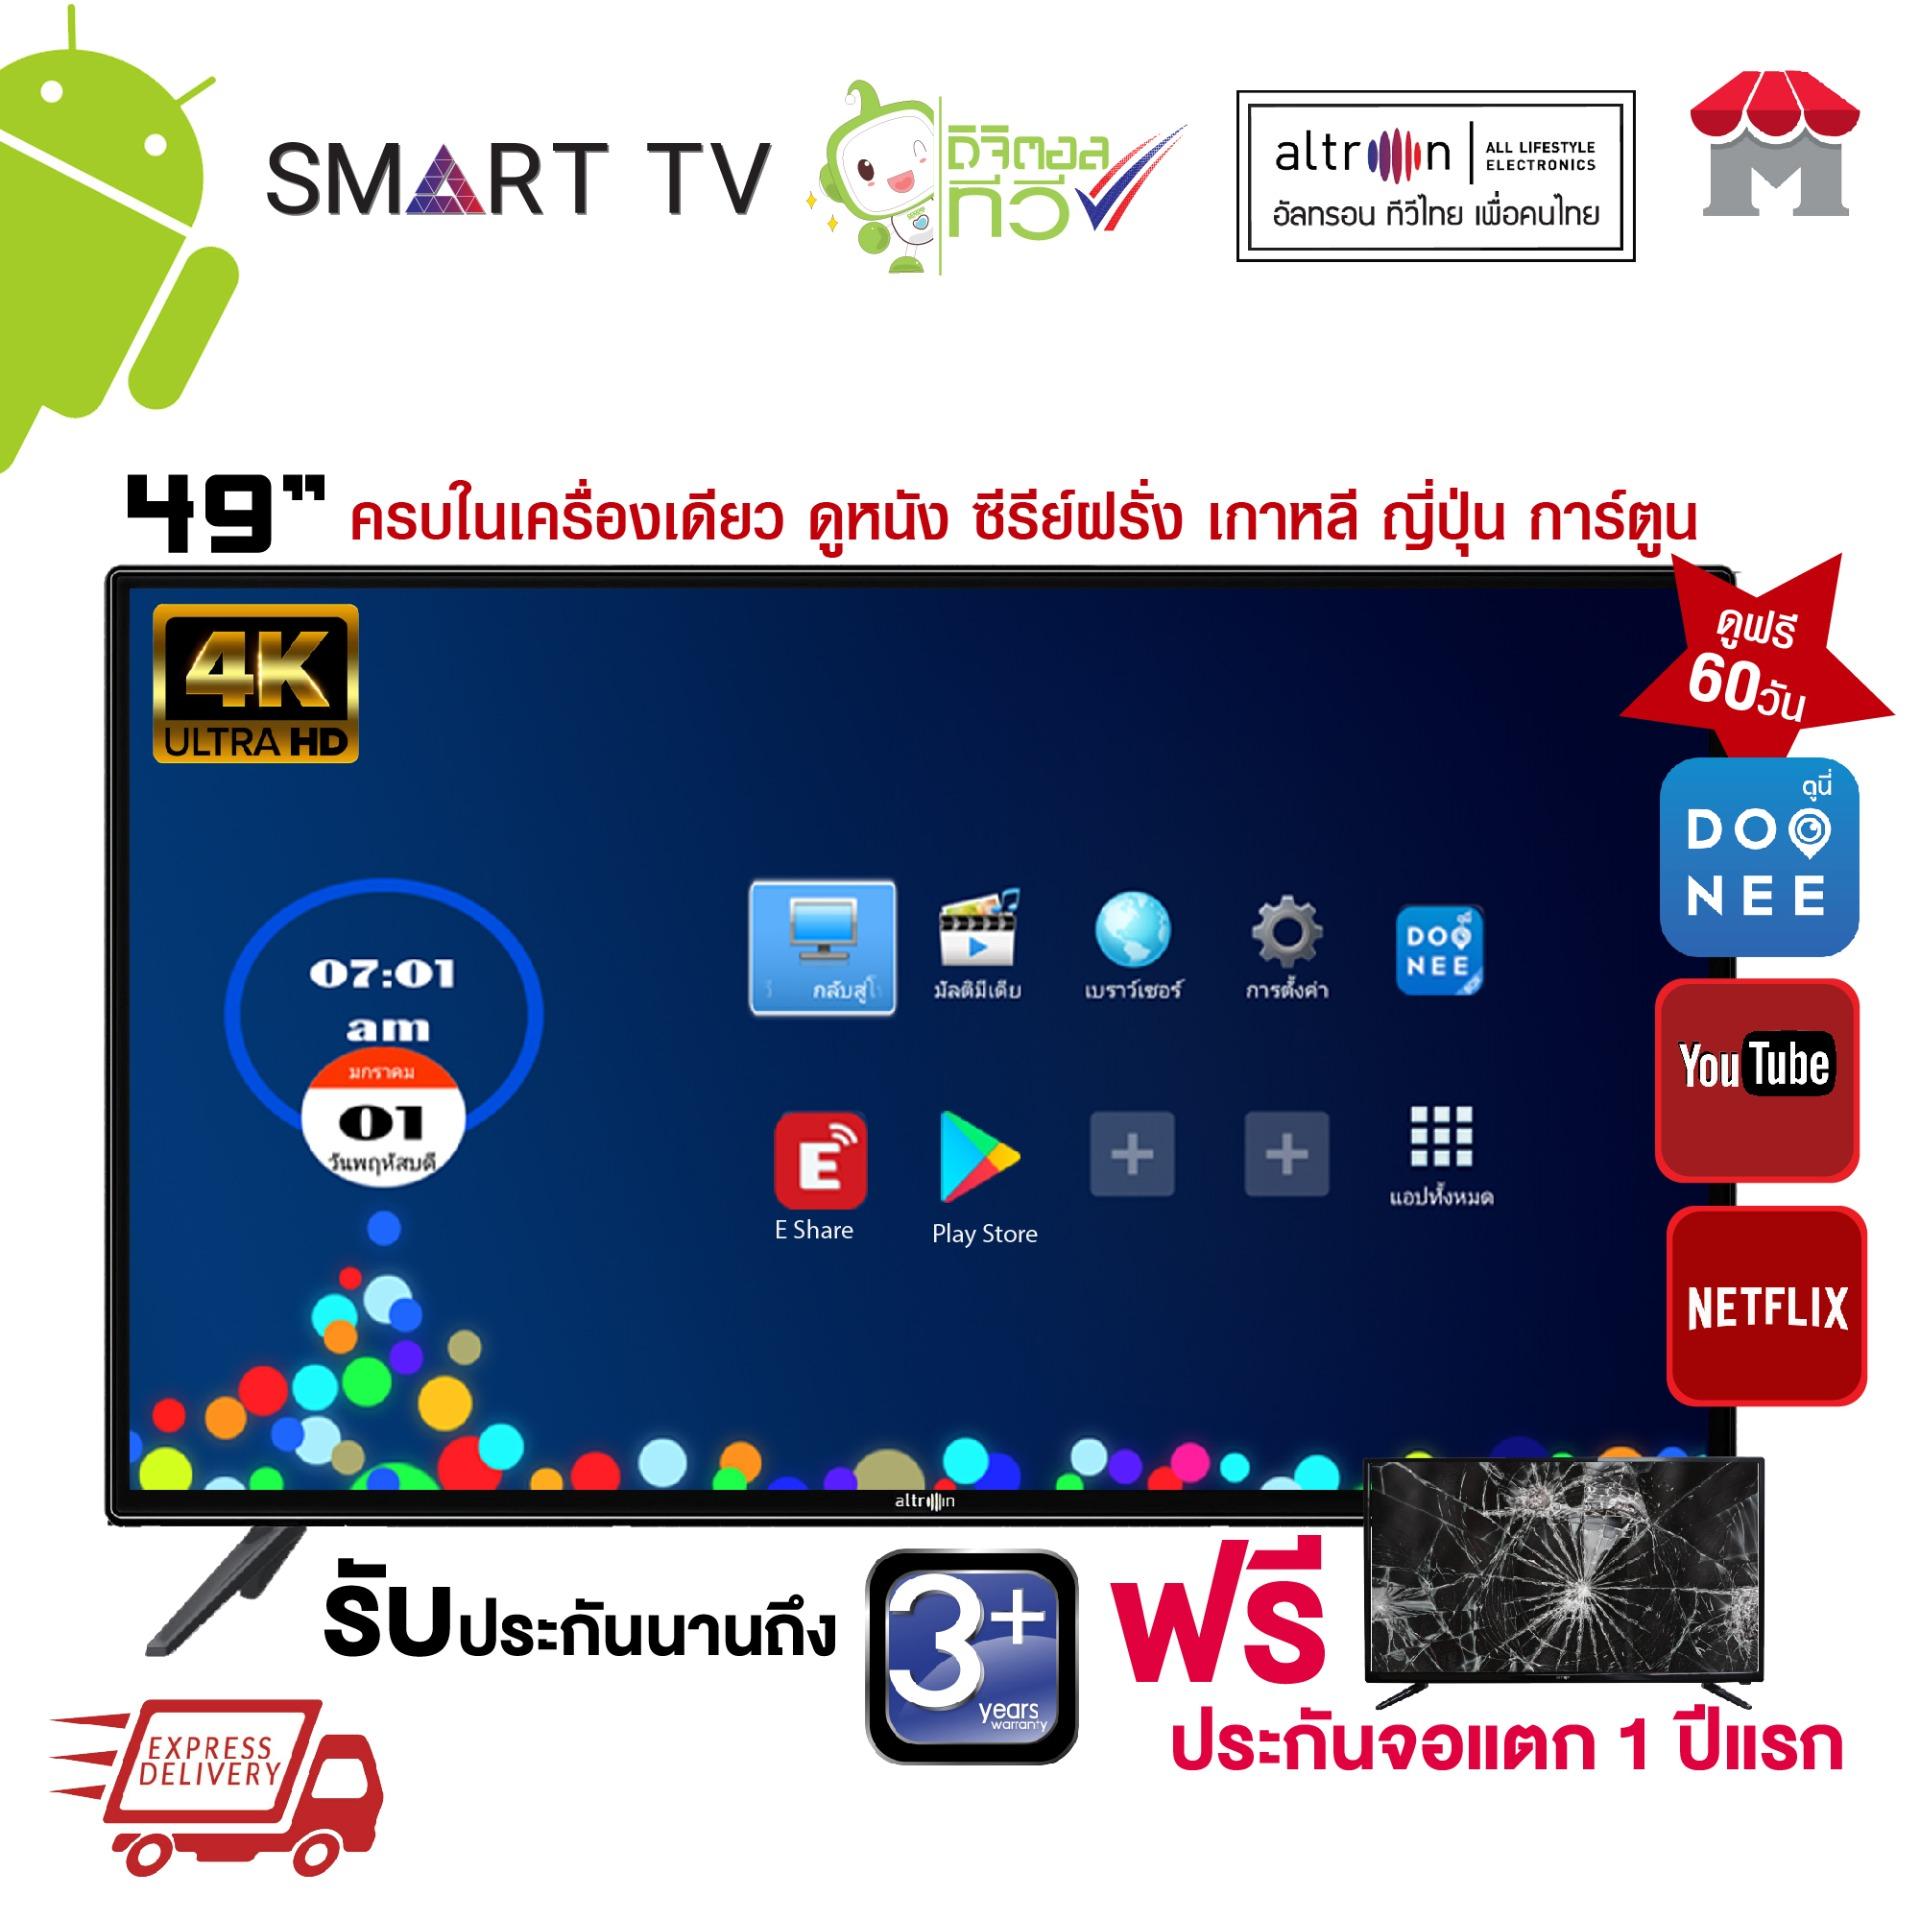 altron 4K UHD Smart TV 49 นิ้ว รุ่น LTV-4904 พร้อมรับประกัน 3 ปี จอแตกเคลมได้ ***